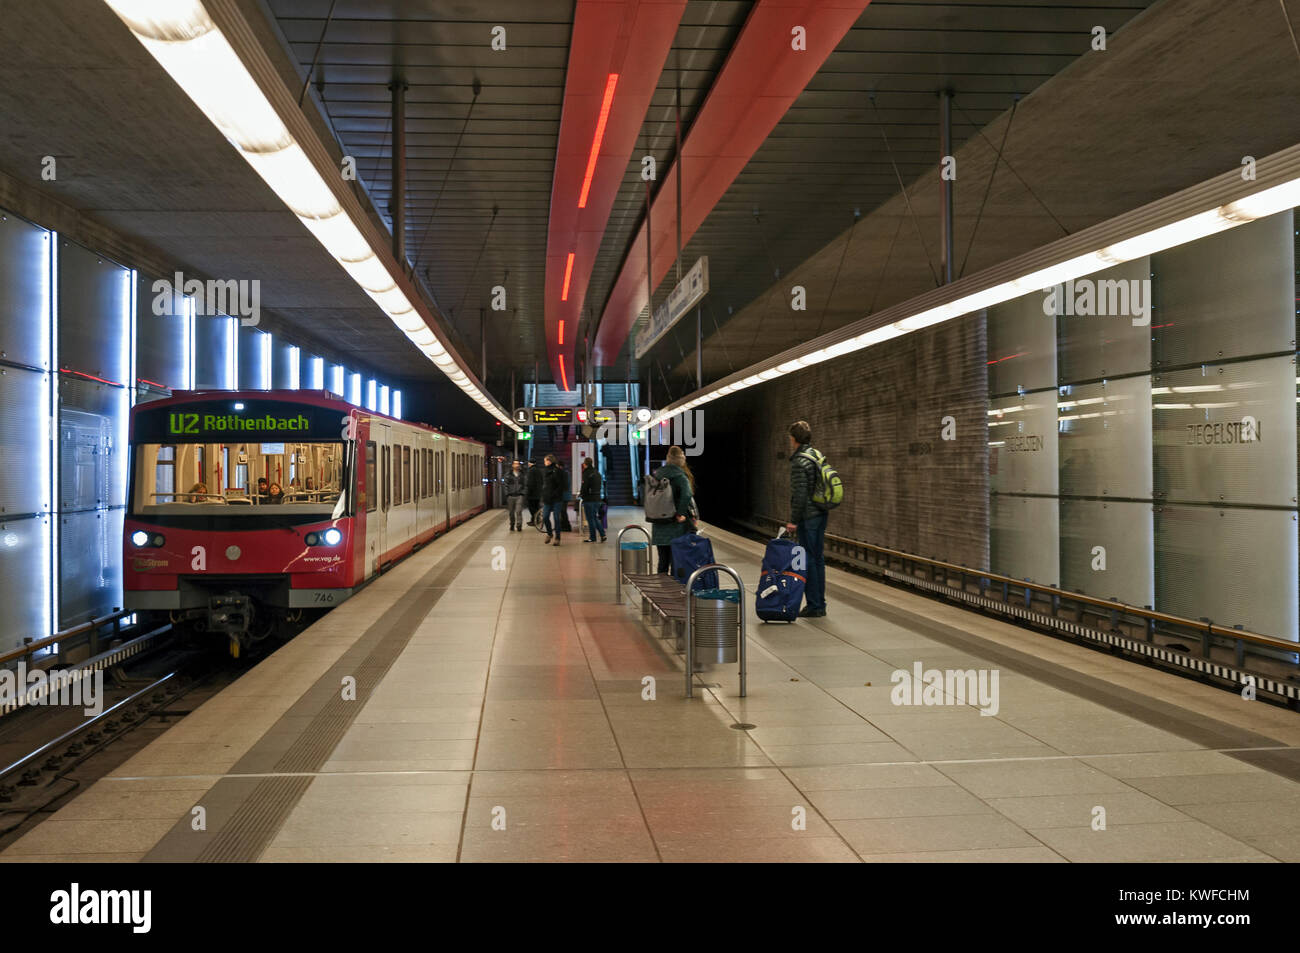 Station on the U2 line of the Nuremberg Underground System, Germany, Europe Stock Photo